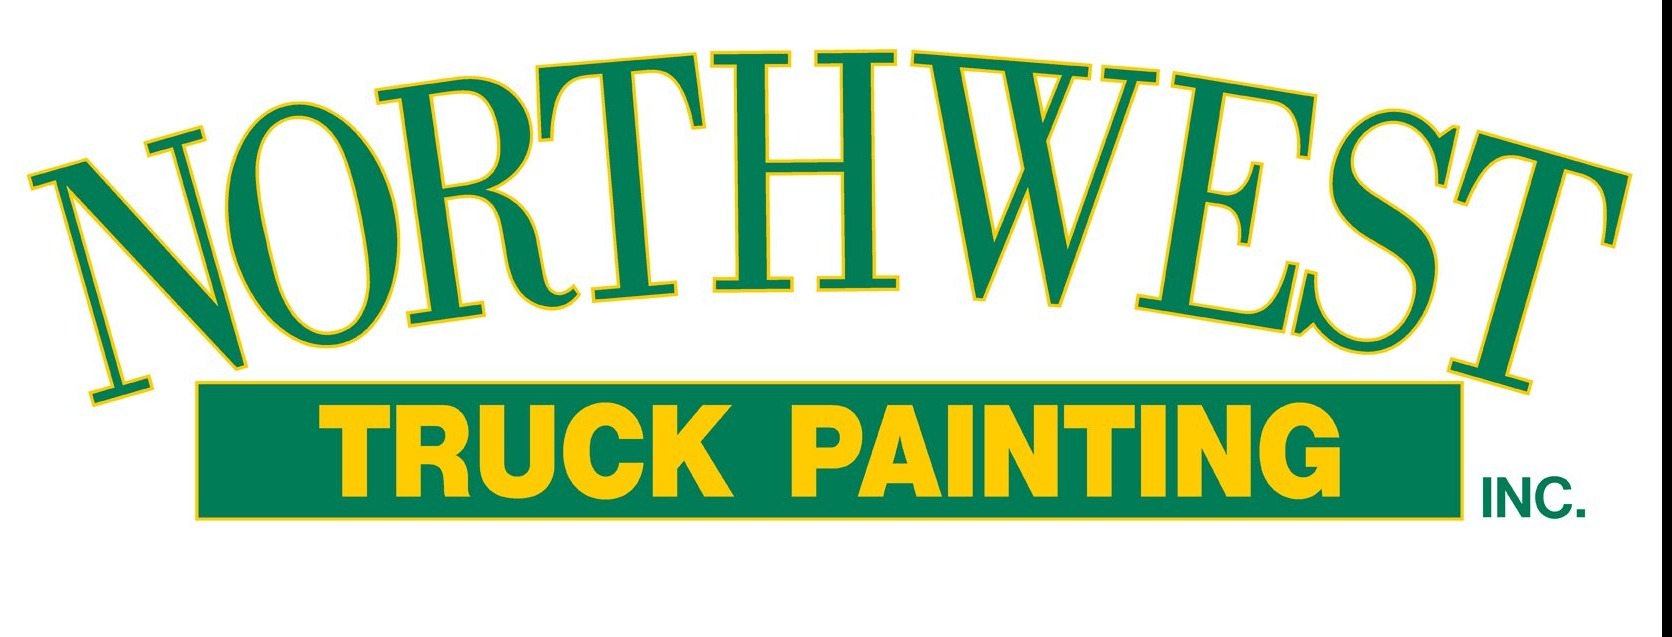 Northwest Truck Painting logo, Eagle Street Promotions sponsor